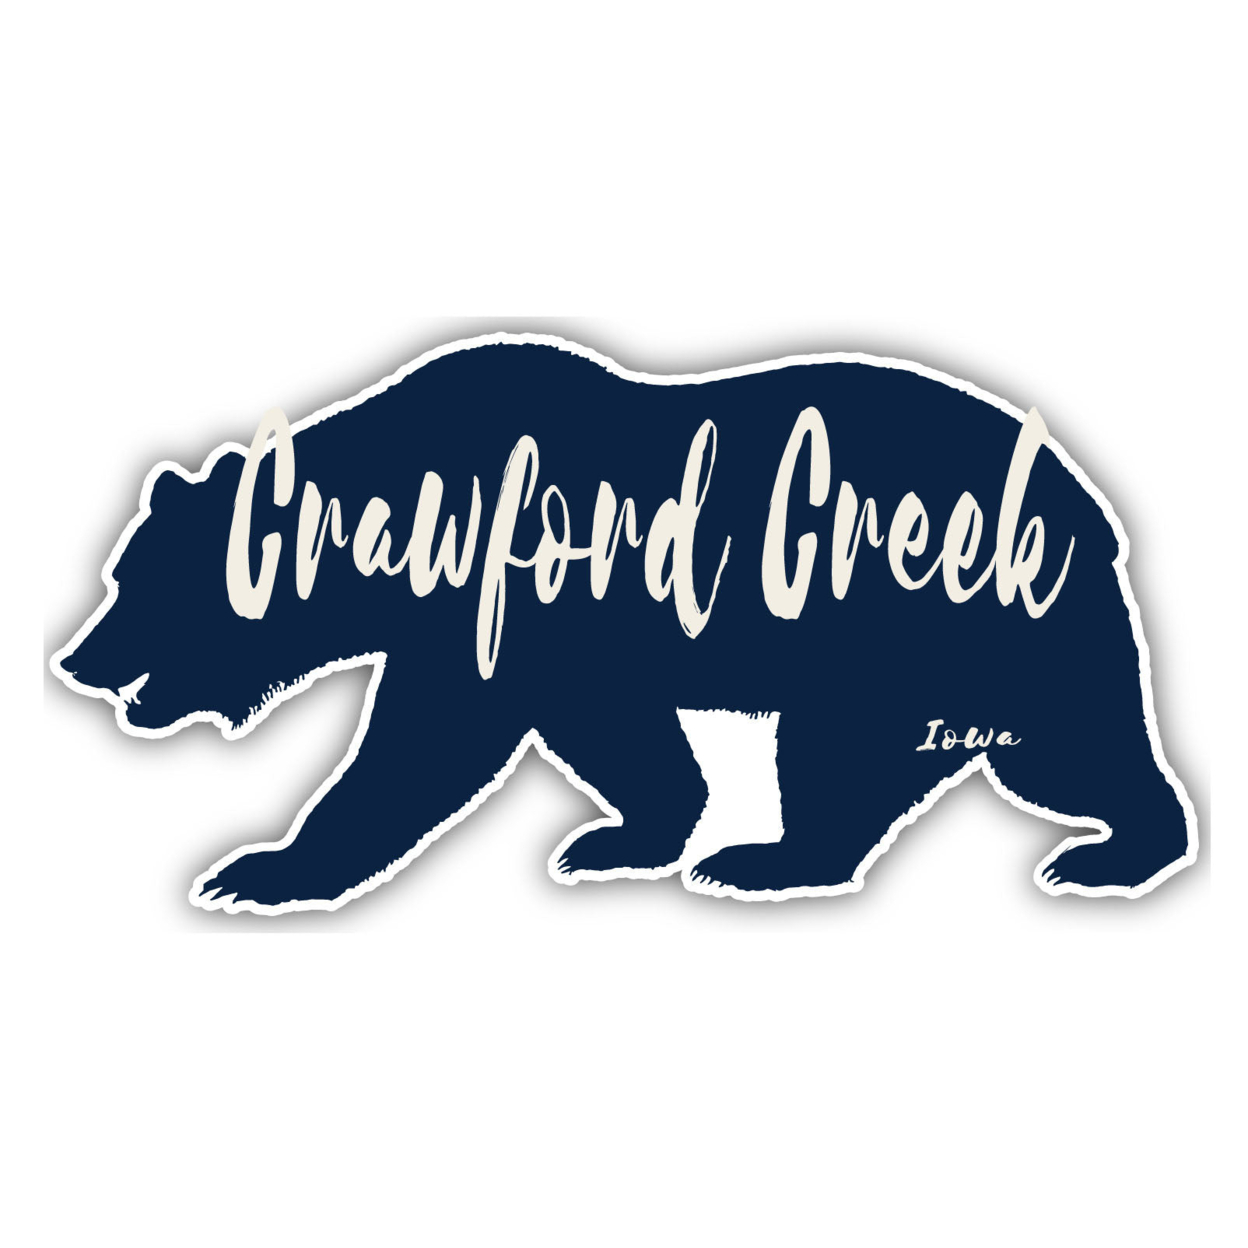 Crawford Creek Iowa Souvenir Decorative Stickers (Choose Theme And Size) - 4-Pack, 4-Inch, Bear